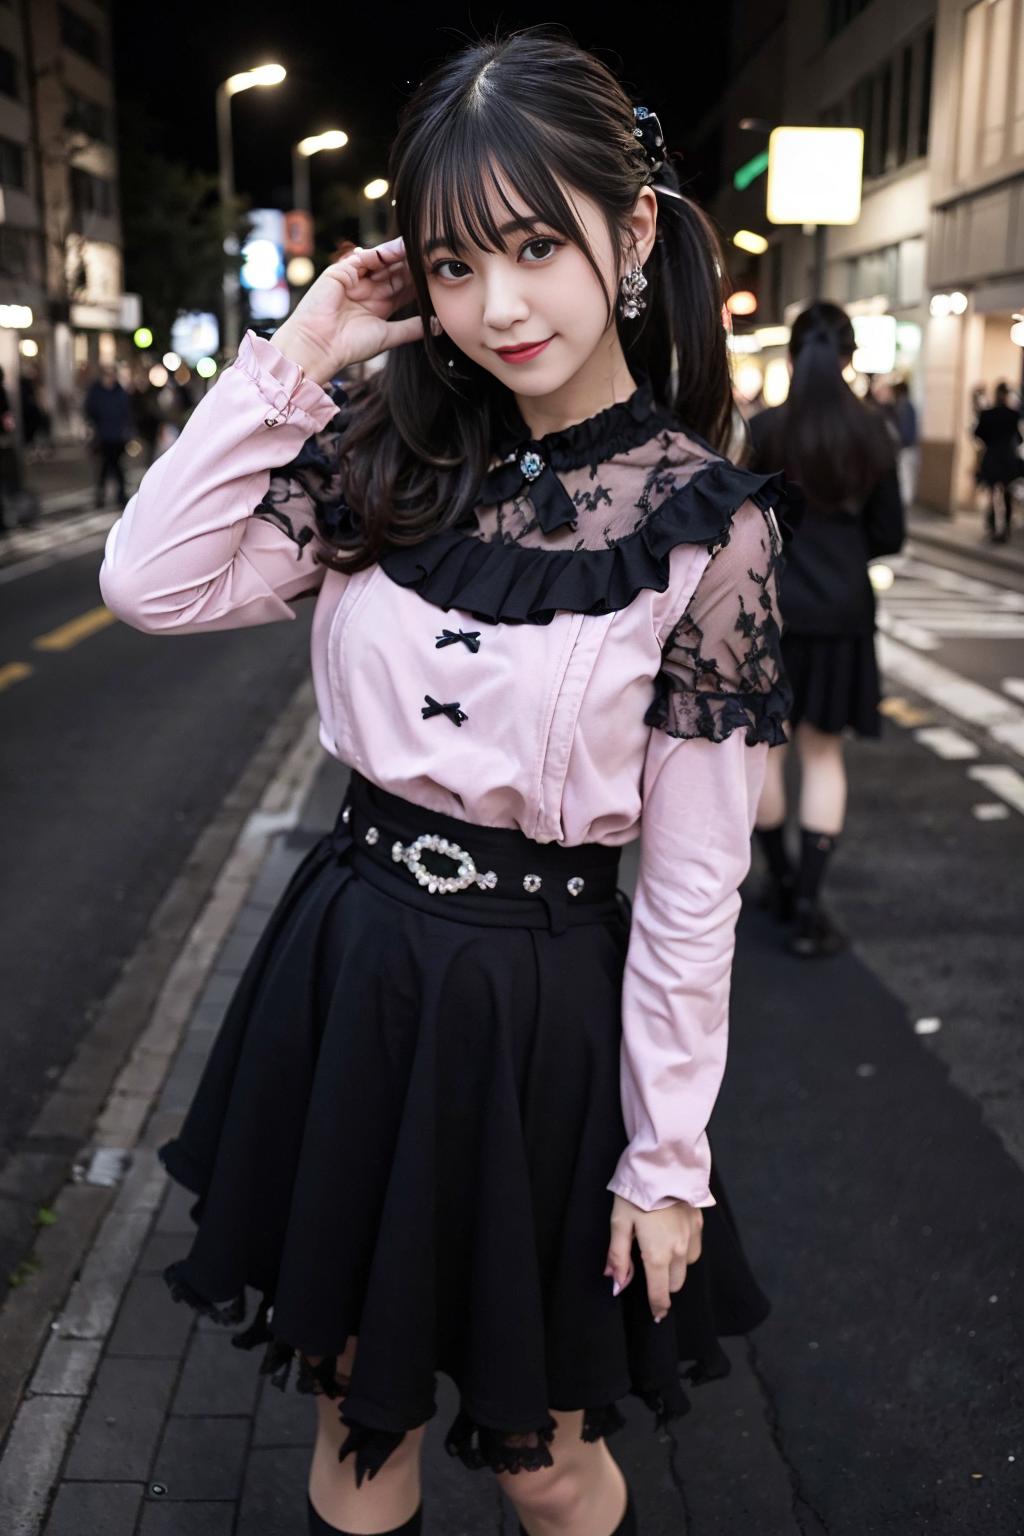 Jirai Kei fashion dress | 地雷系服装 image by cyberAngel_